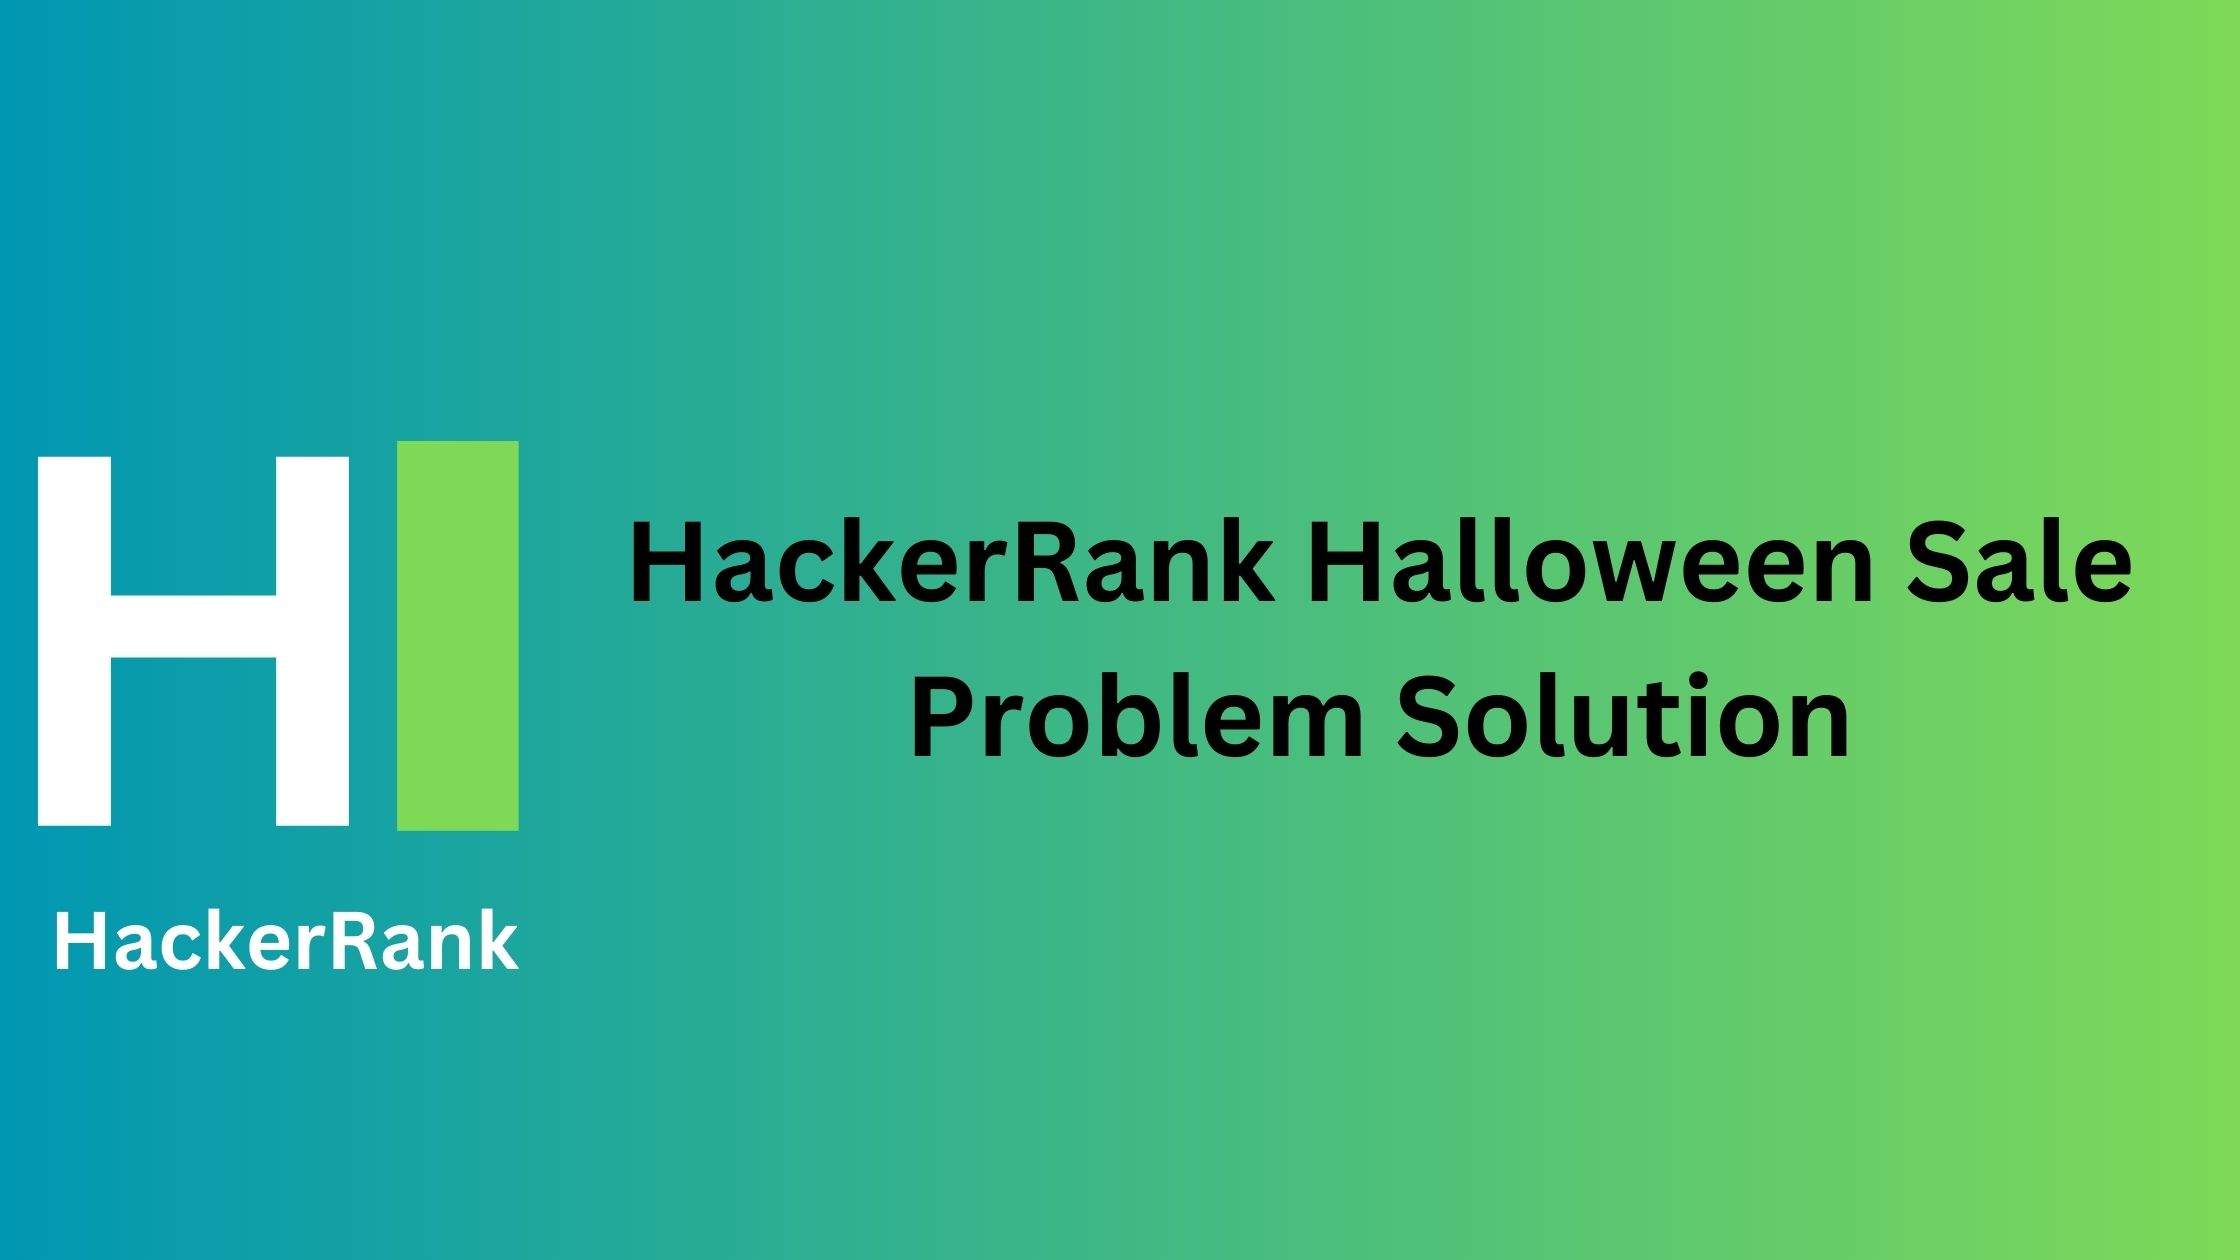 HackerRank Halloween Sale Problem Solution